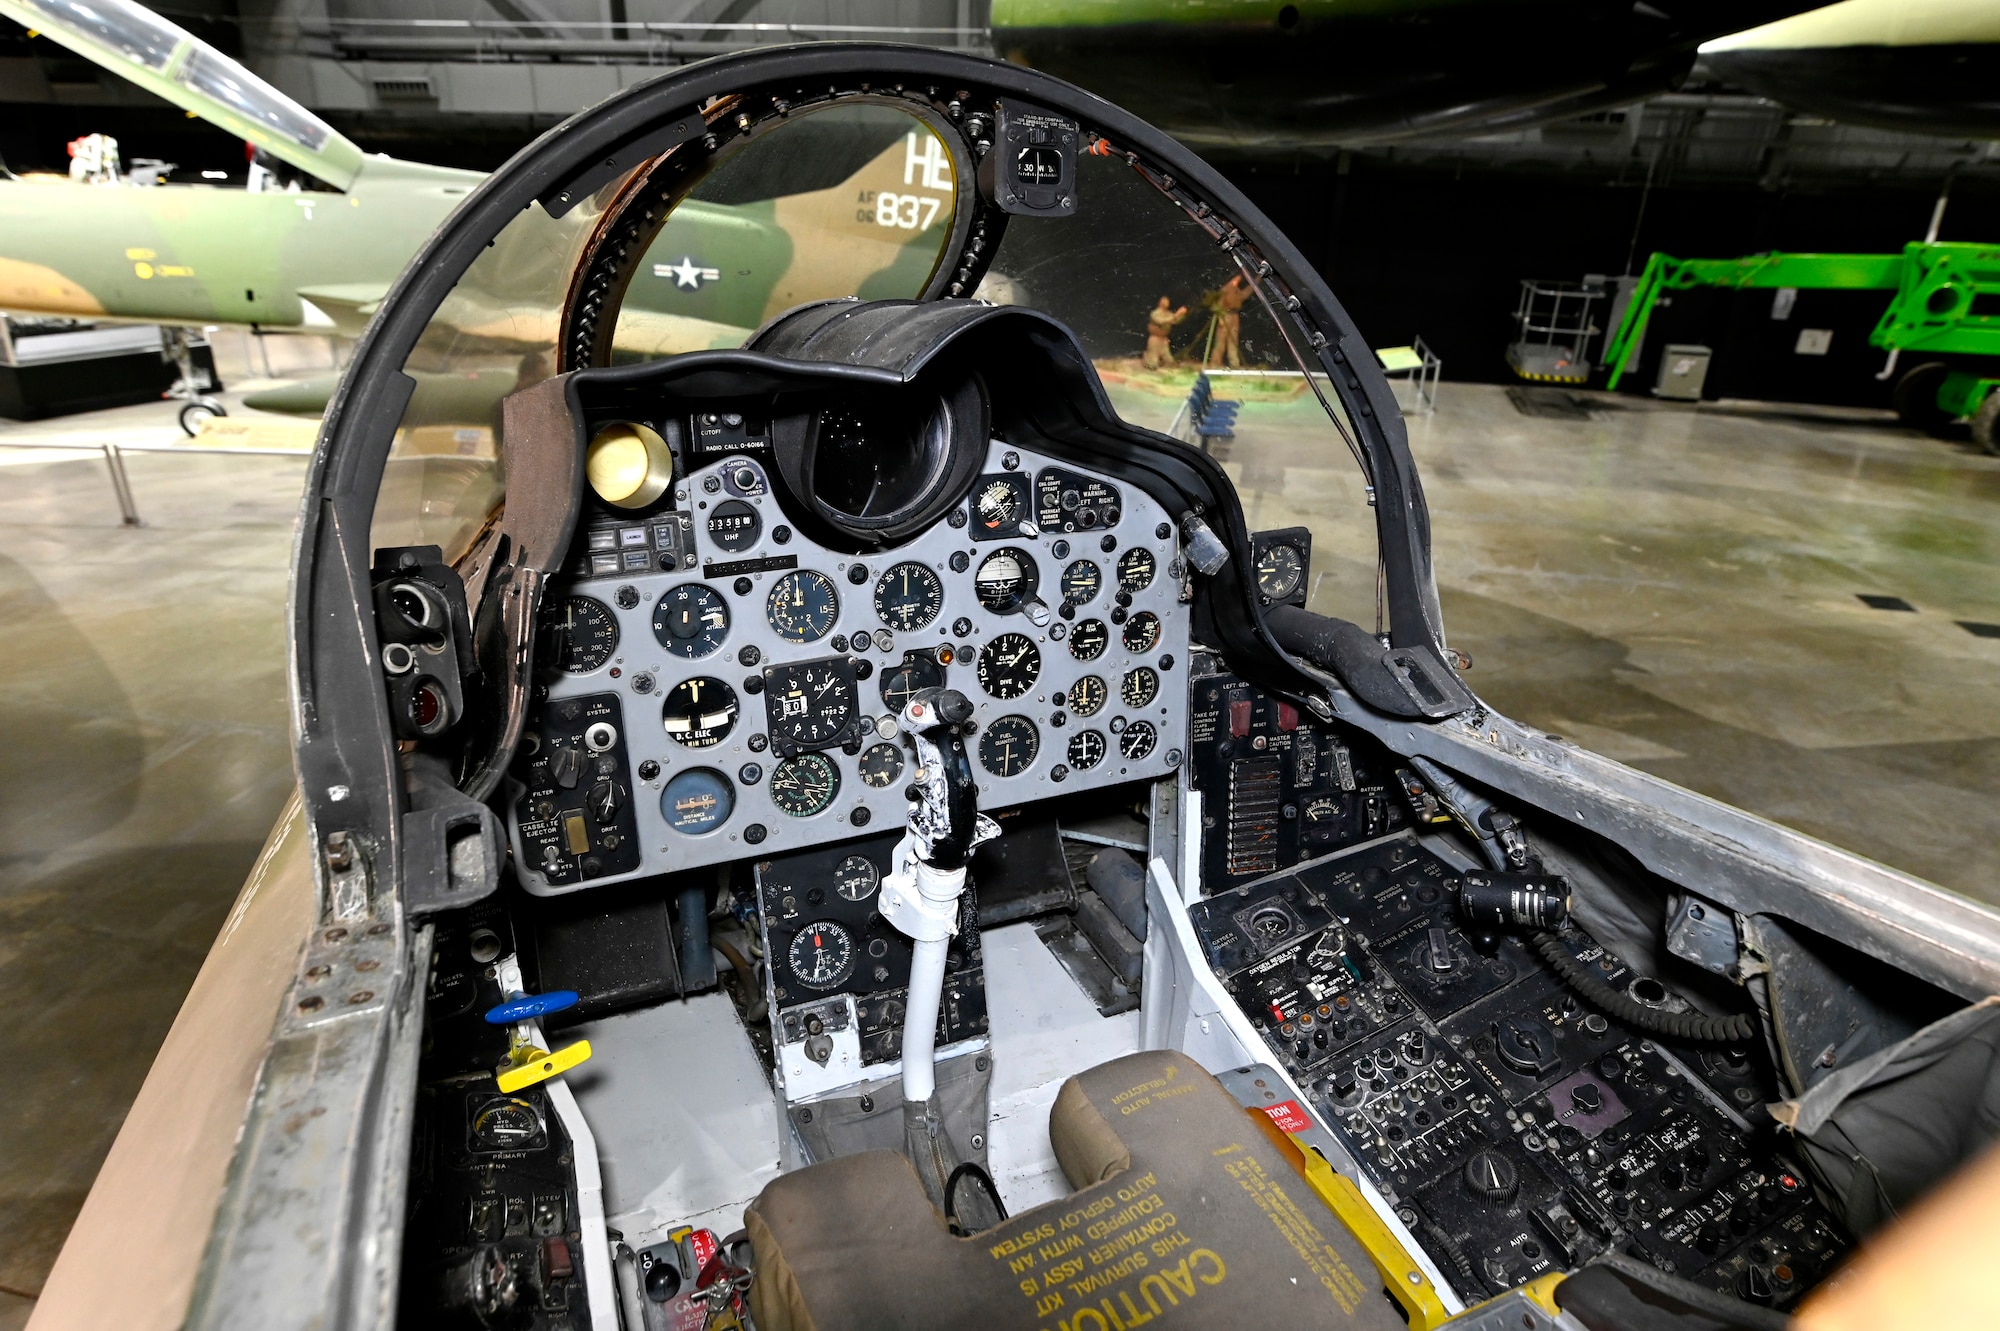 McDonnell RF-101C Voodoo cockpit view